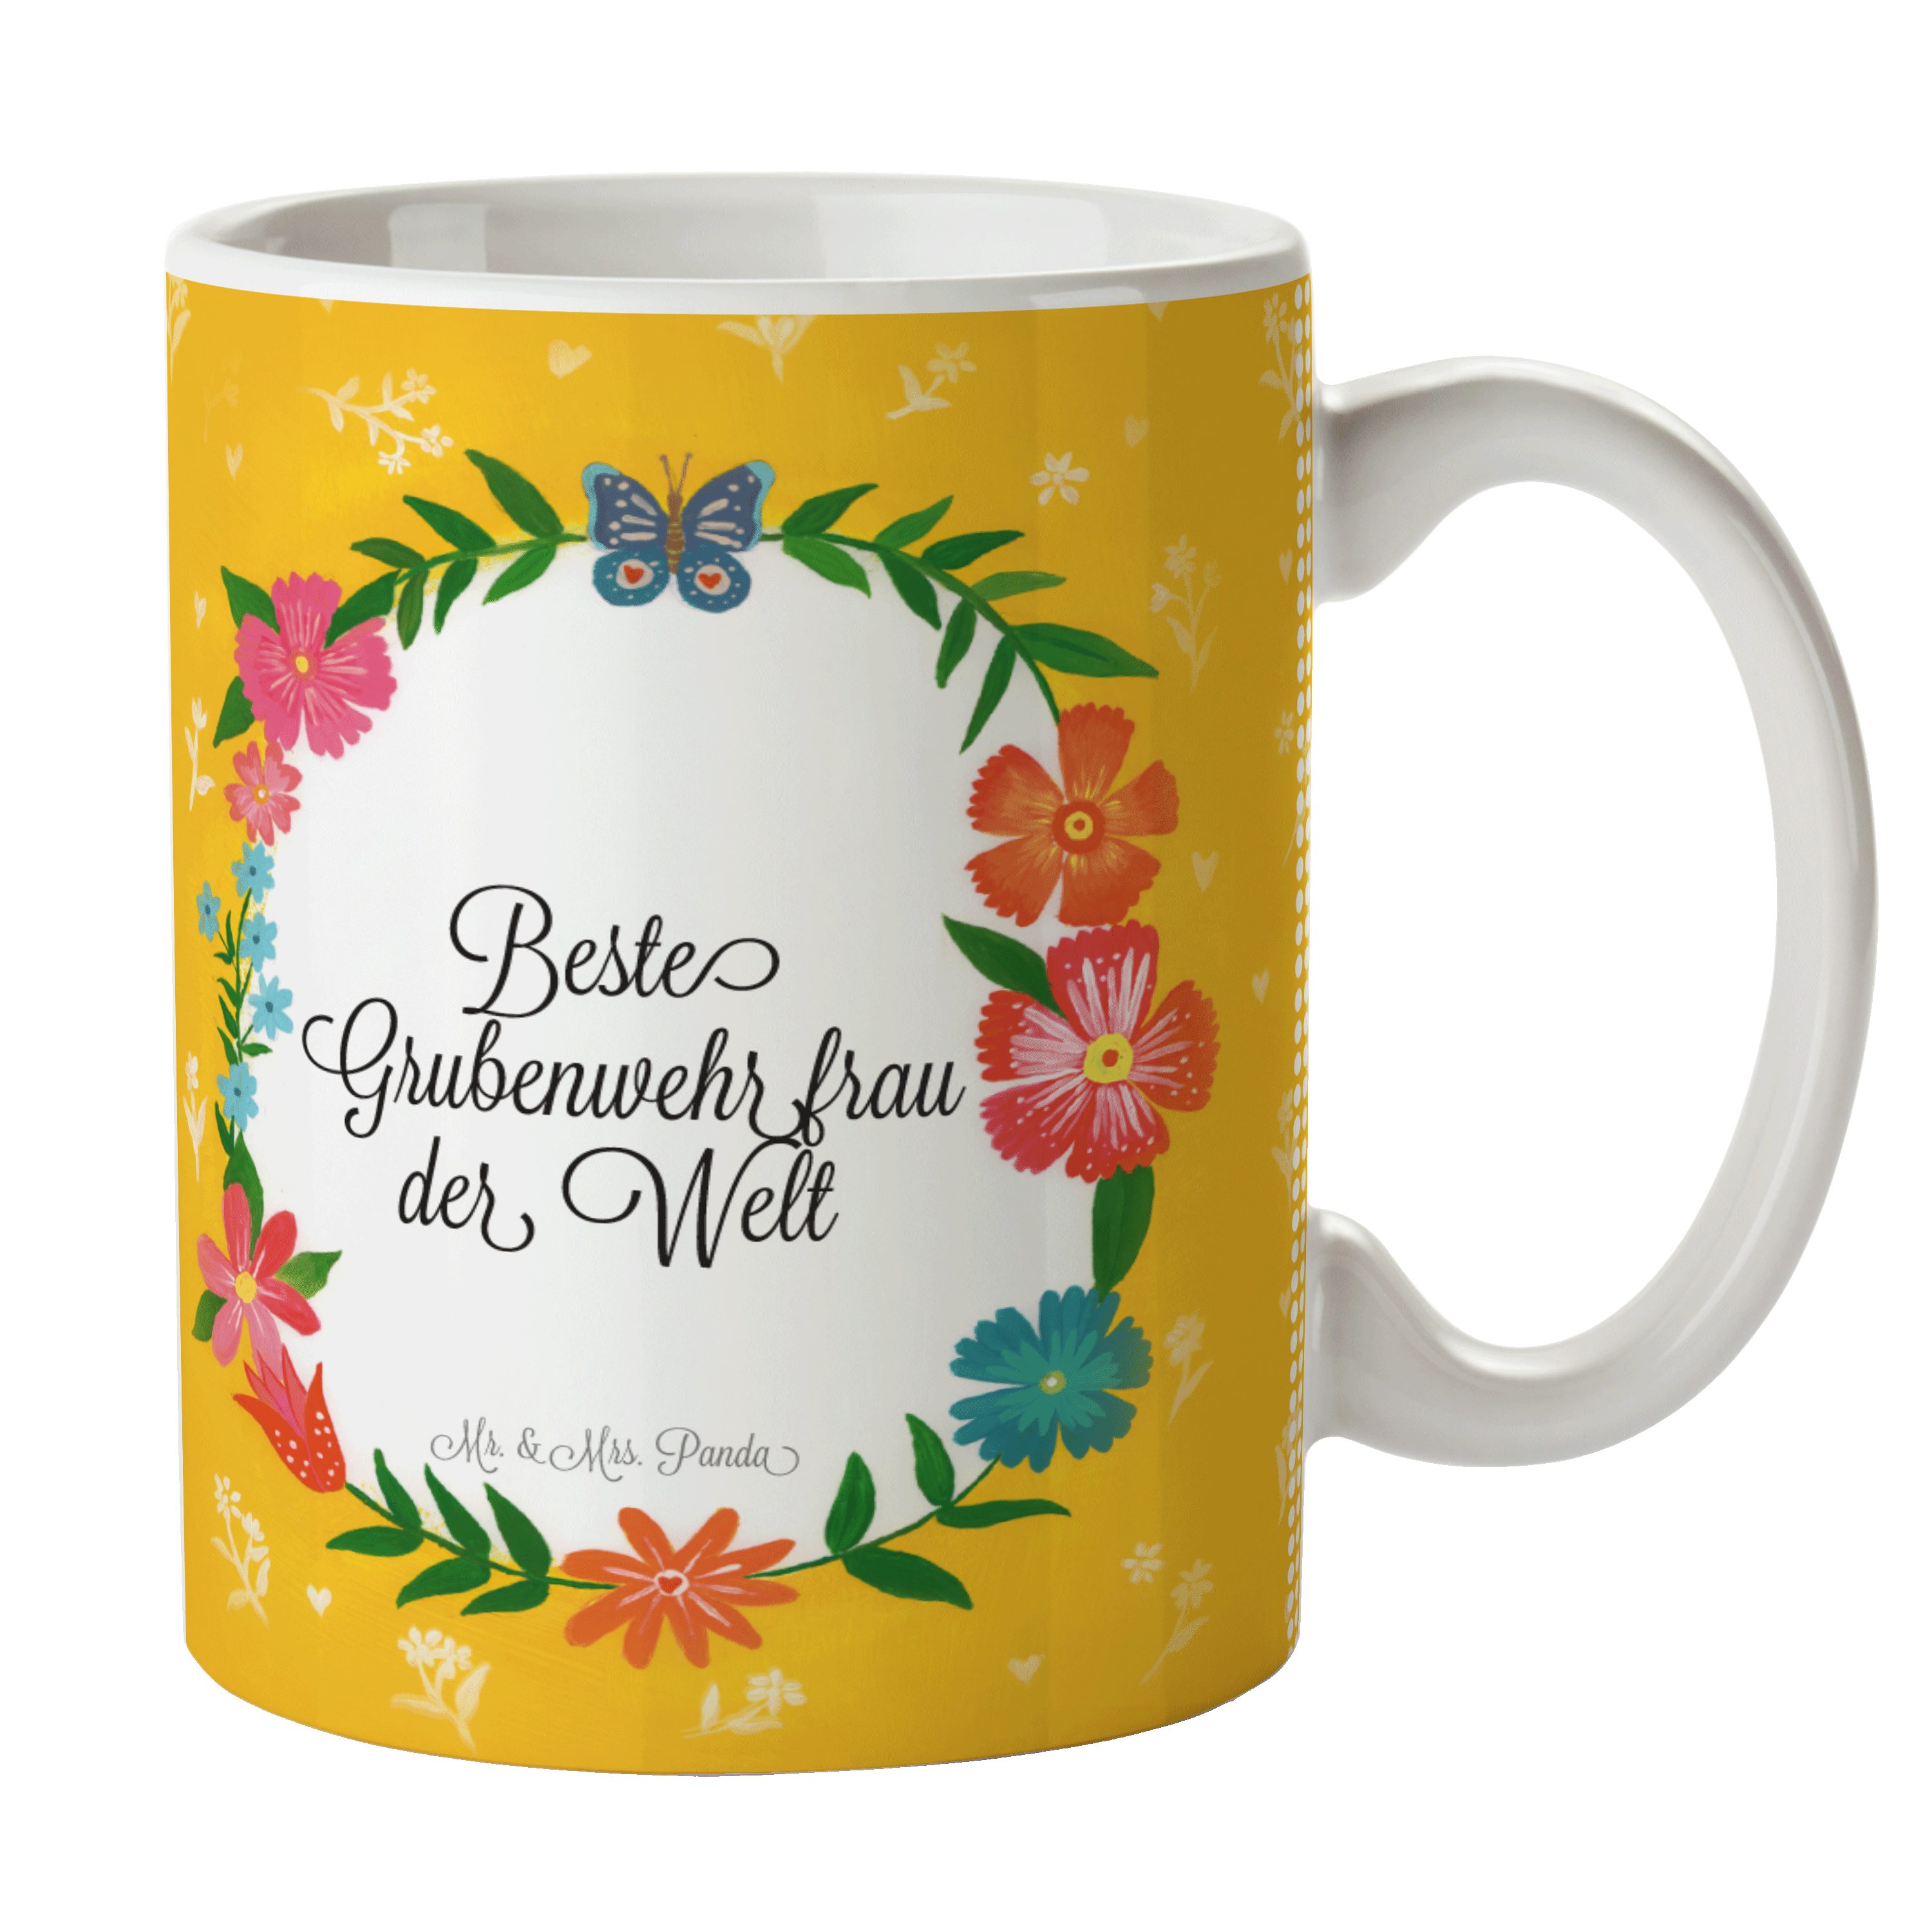 Mr. & Mrs. Keramik - Tasse Teebecher, Grubenwehrfrau Gratulation, Geschenk, Büro, Kaffeebecher, Panda